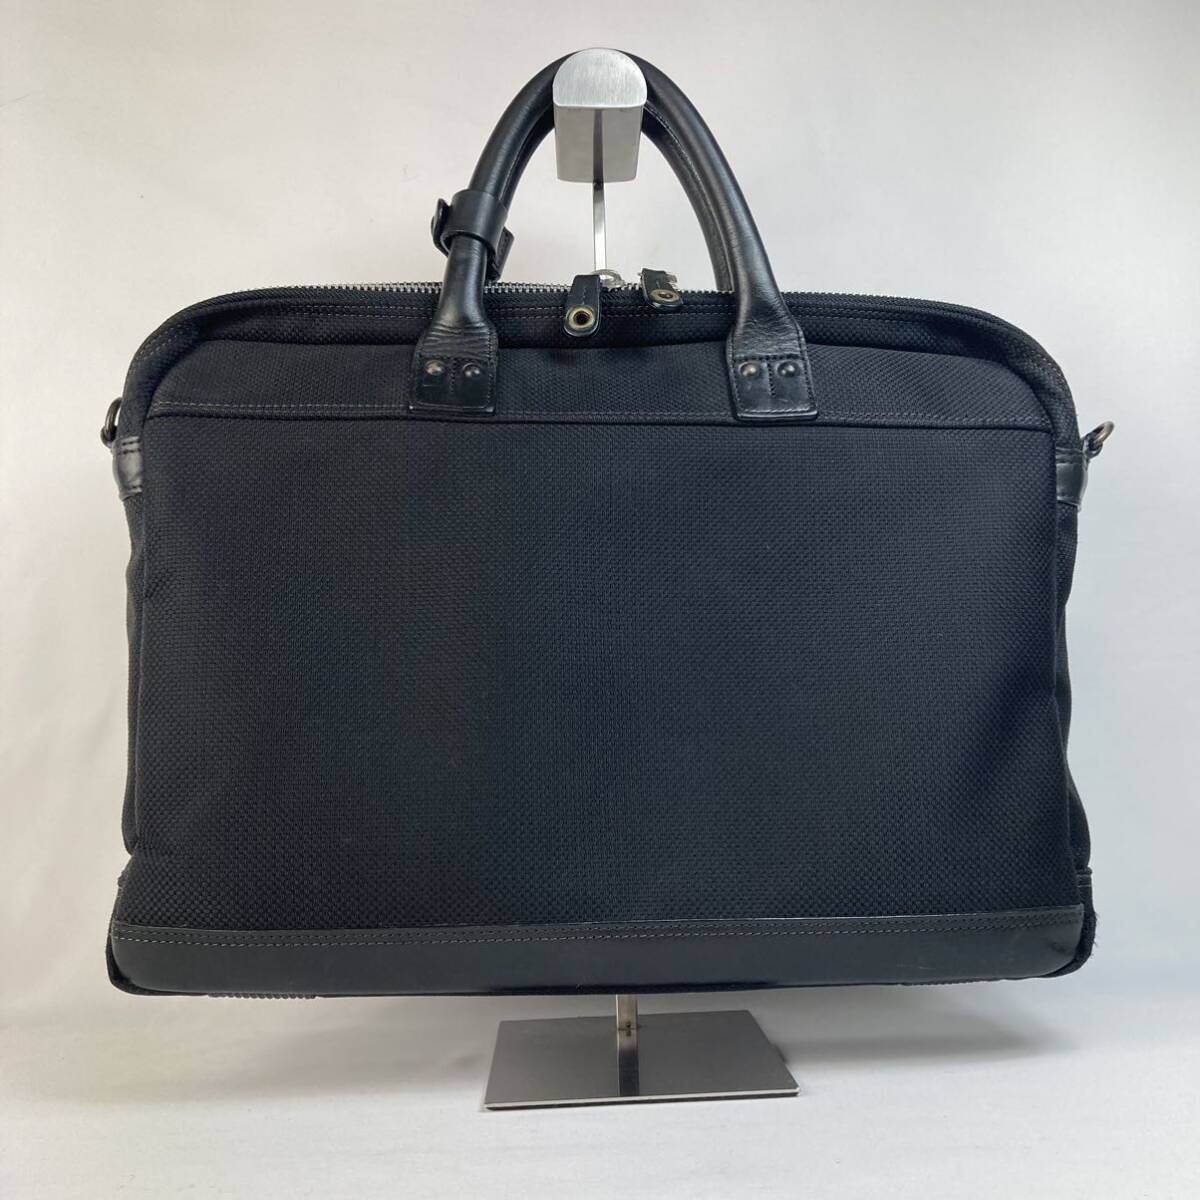 1 jpy start PORTER Porter leather original leather business bag briefcase handbag multifunction A4 storage dark brown commuting men's 